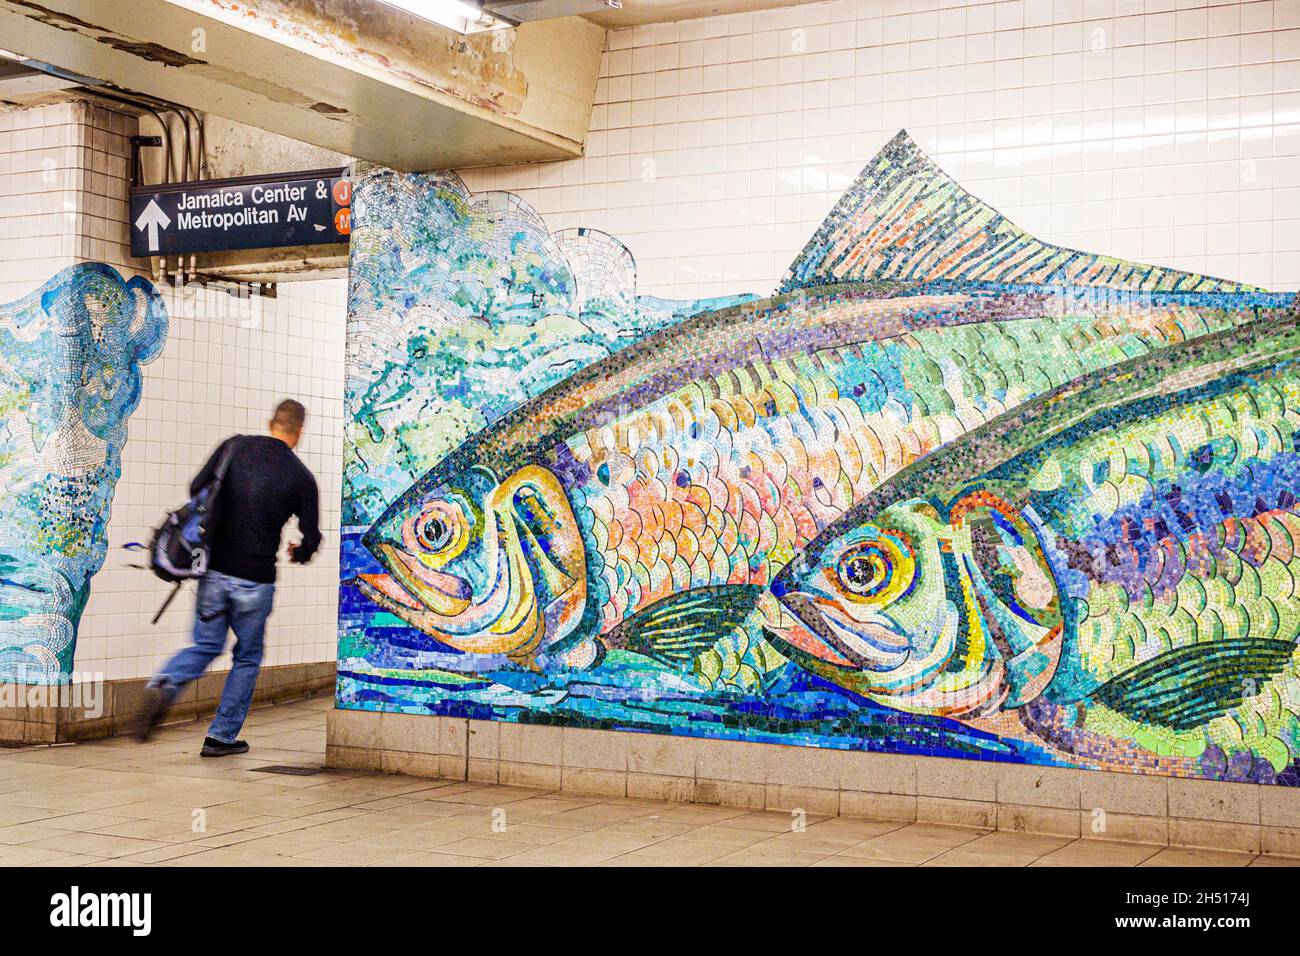 New York City,NY NYC Lower Manhattan,subway MTA,Delancey Street Station art artwork mural,Shad Crossing Ming Fay artist man male running mosaic tile Stock Photo